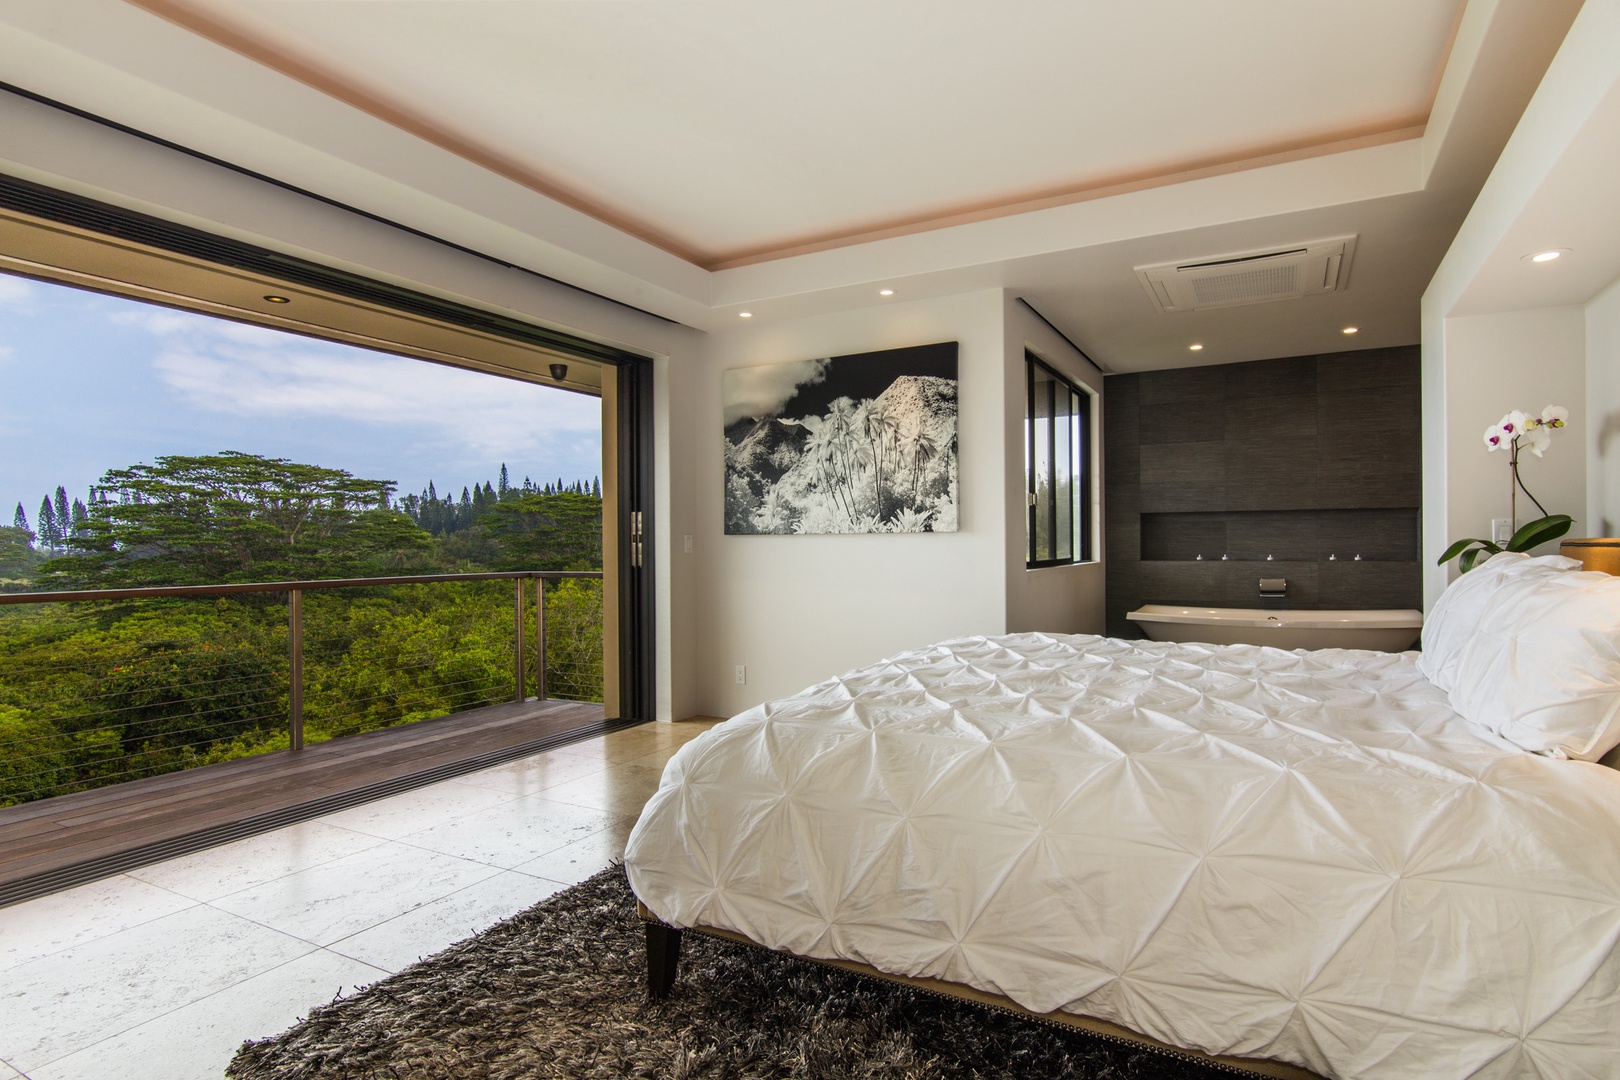 Princeville Vacation Rentals, Laulea Kailani Villa (KAUAI) - Primary bedroom view.